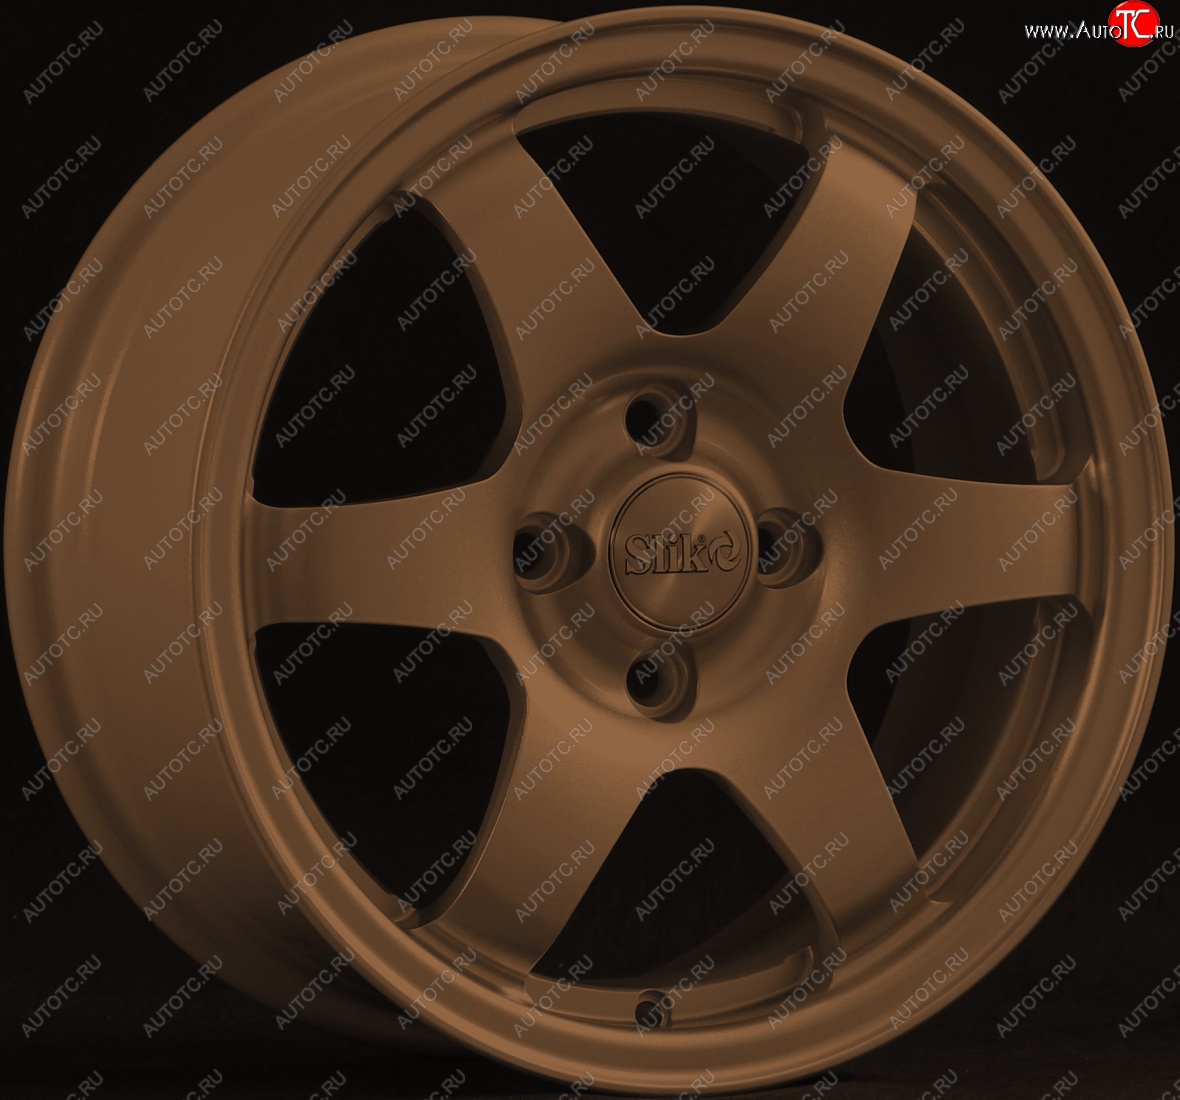 15 249 р. Кованый диск Slik Sport 6.5x15 (Металлик коньячная бронза. Глянец) Alfa Romeo 155 167 (1992-1998) 4x98.0xDIA58.1xET46.0 (Цвет: Металлик коньячная бронза. Глянец)